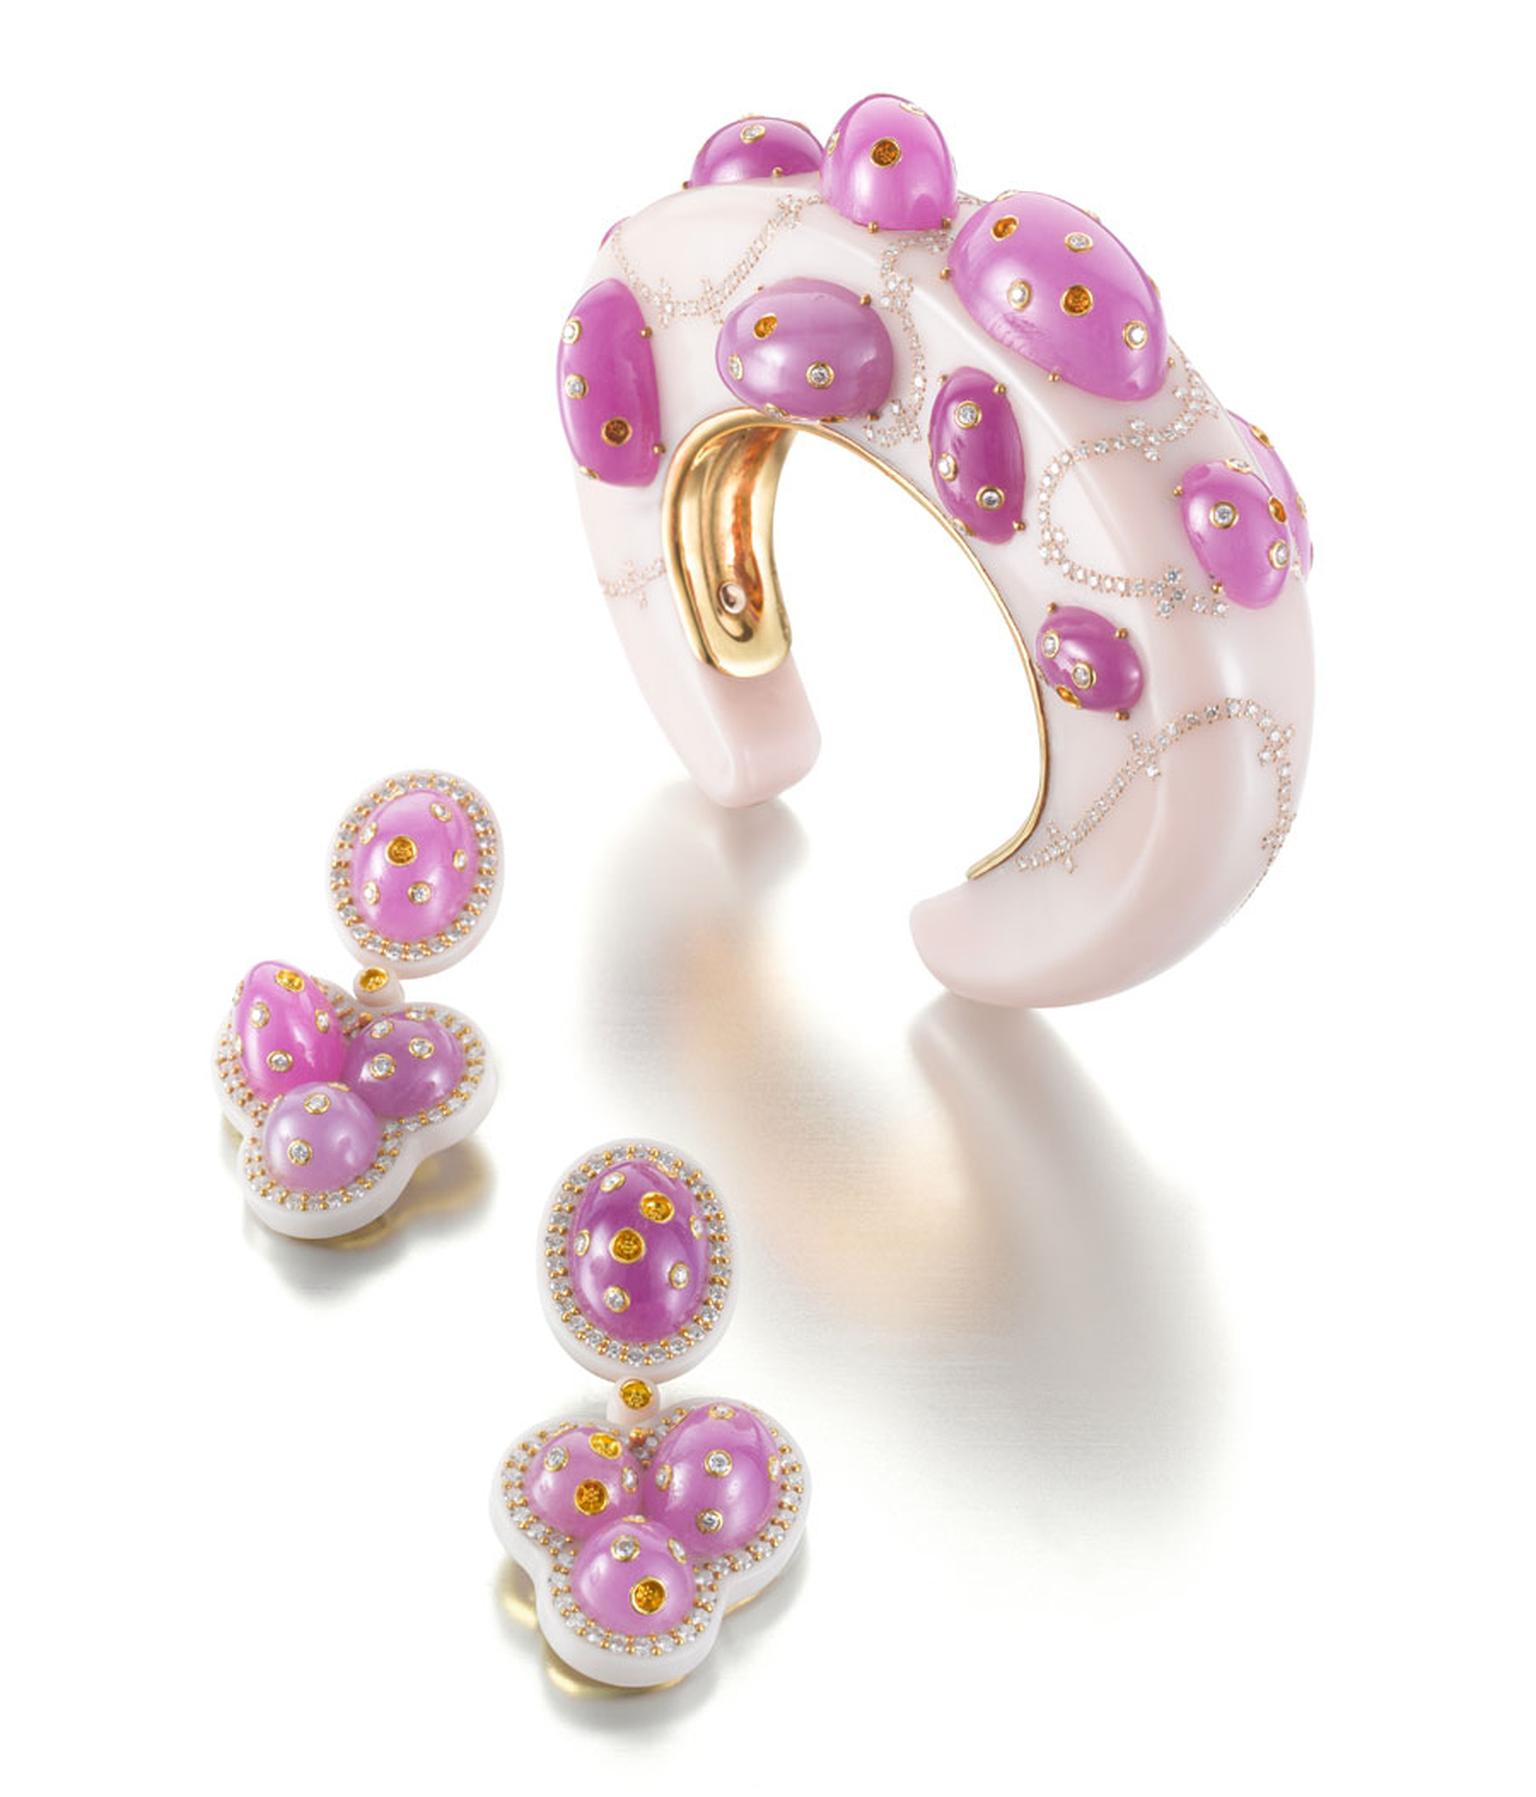 Siegelson-Artistic-Pink-Bakelite-Ruby-and-Diamond-Jellybean-Suite-of-Bracelet-and-Earrings-by-Daniel-Brush.jpg